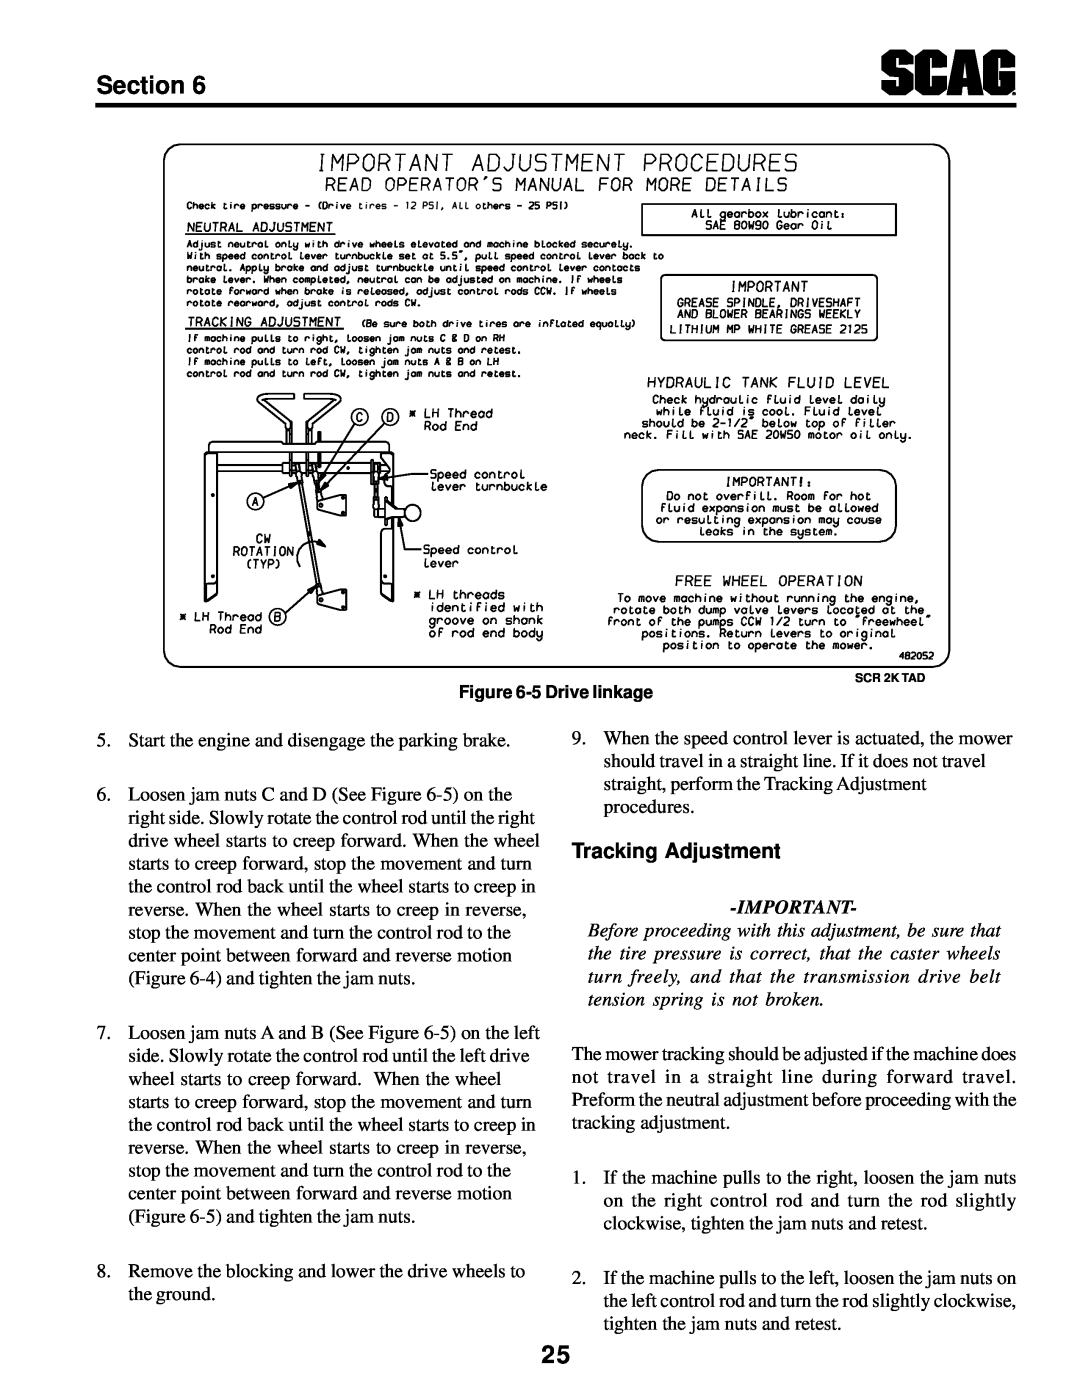 MB QUART SCR manual Tracking Adjustment, Section 